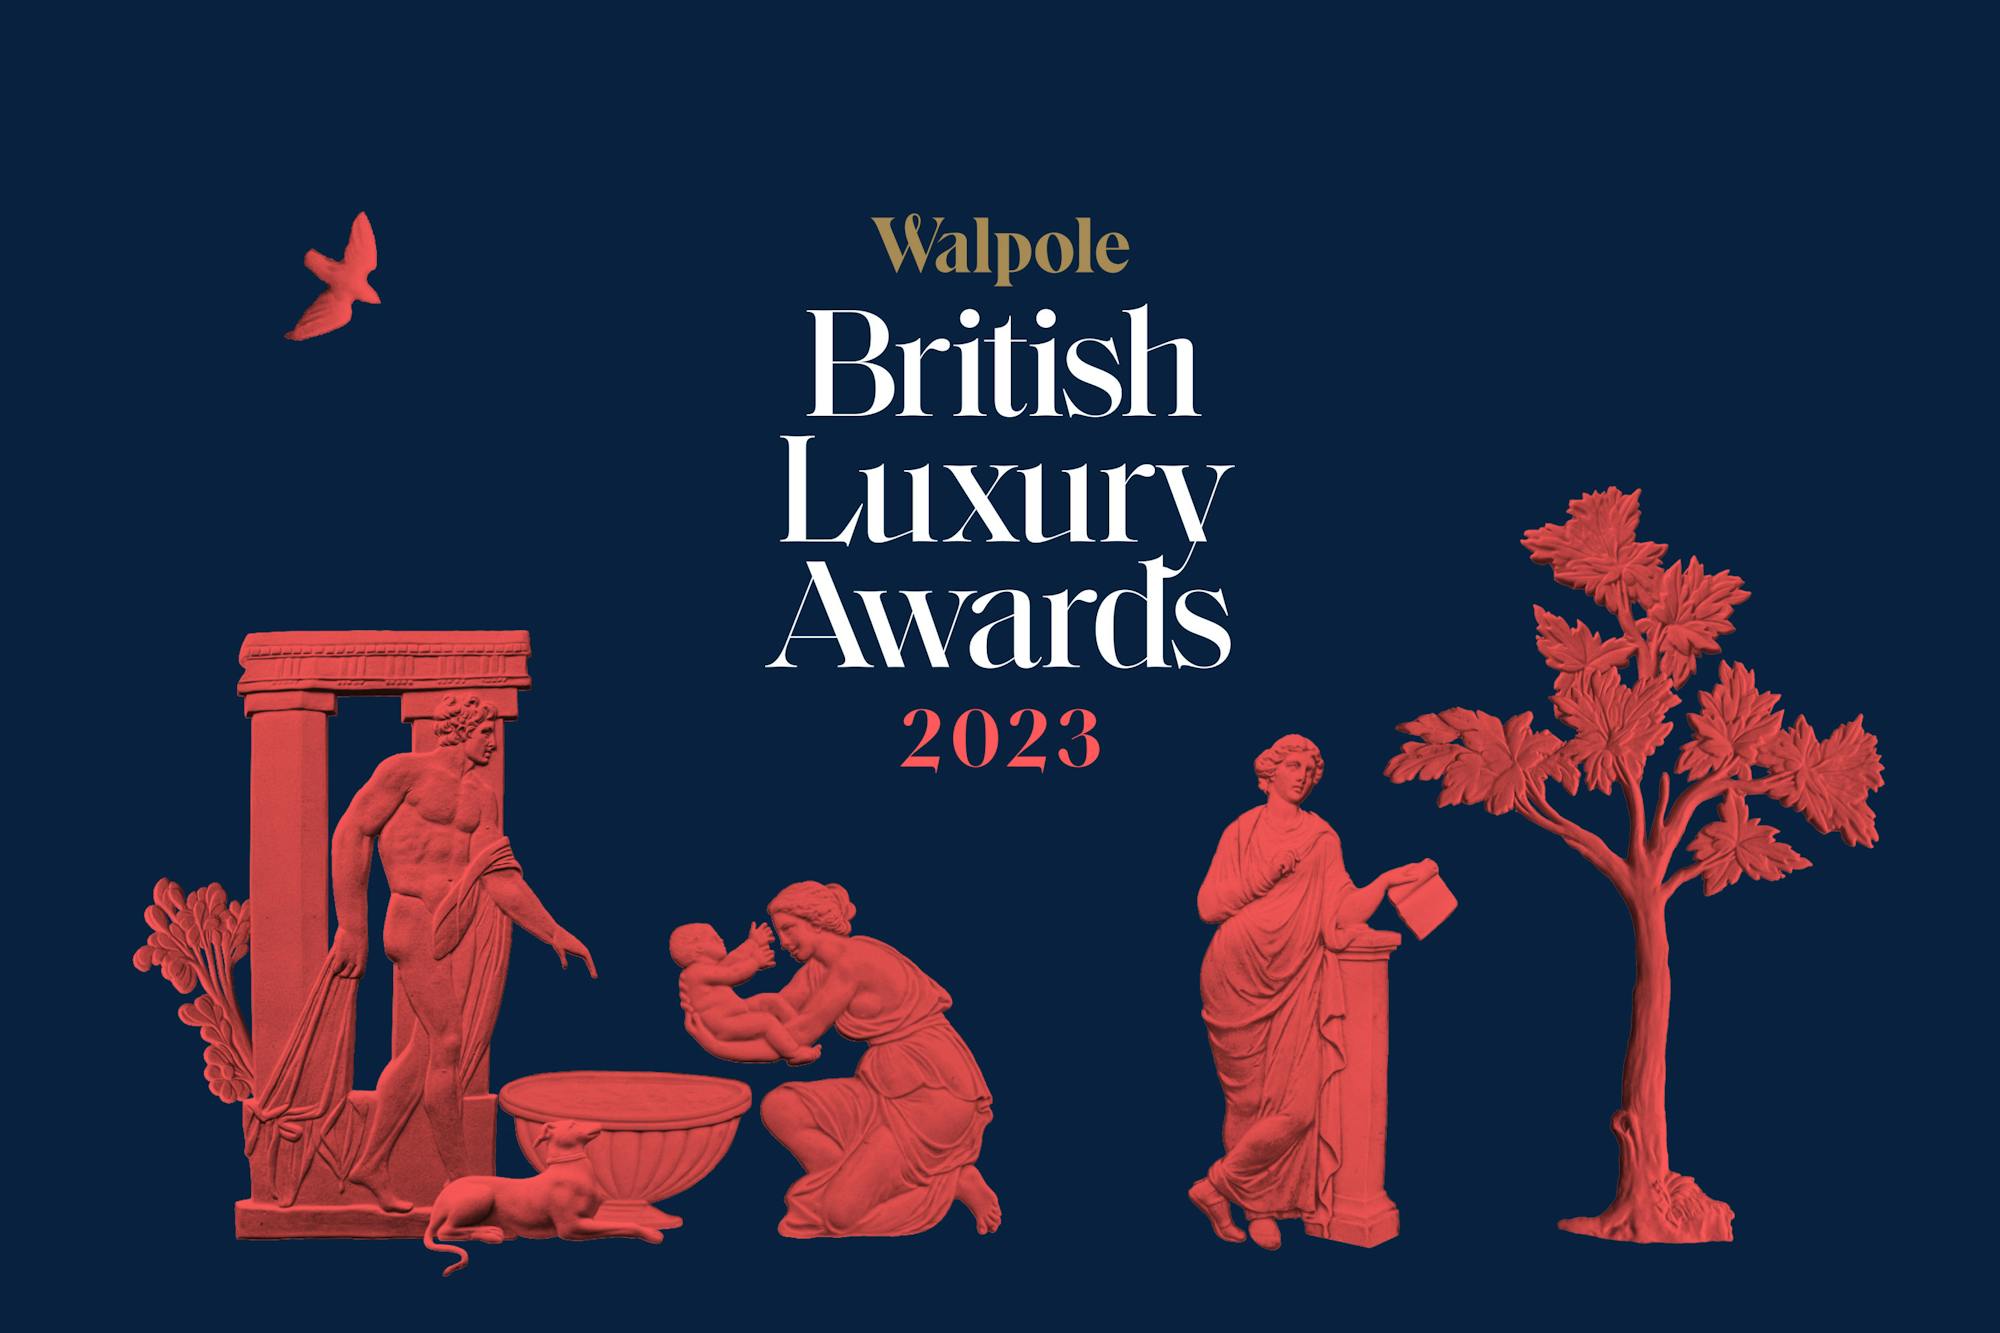 Walpole Awards All the winners at the Walpole British Luxury Awards 2023 